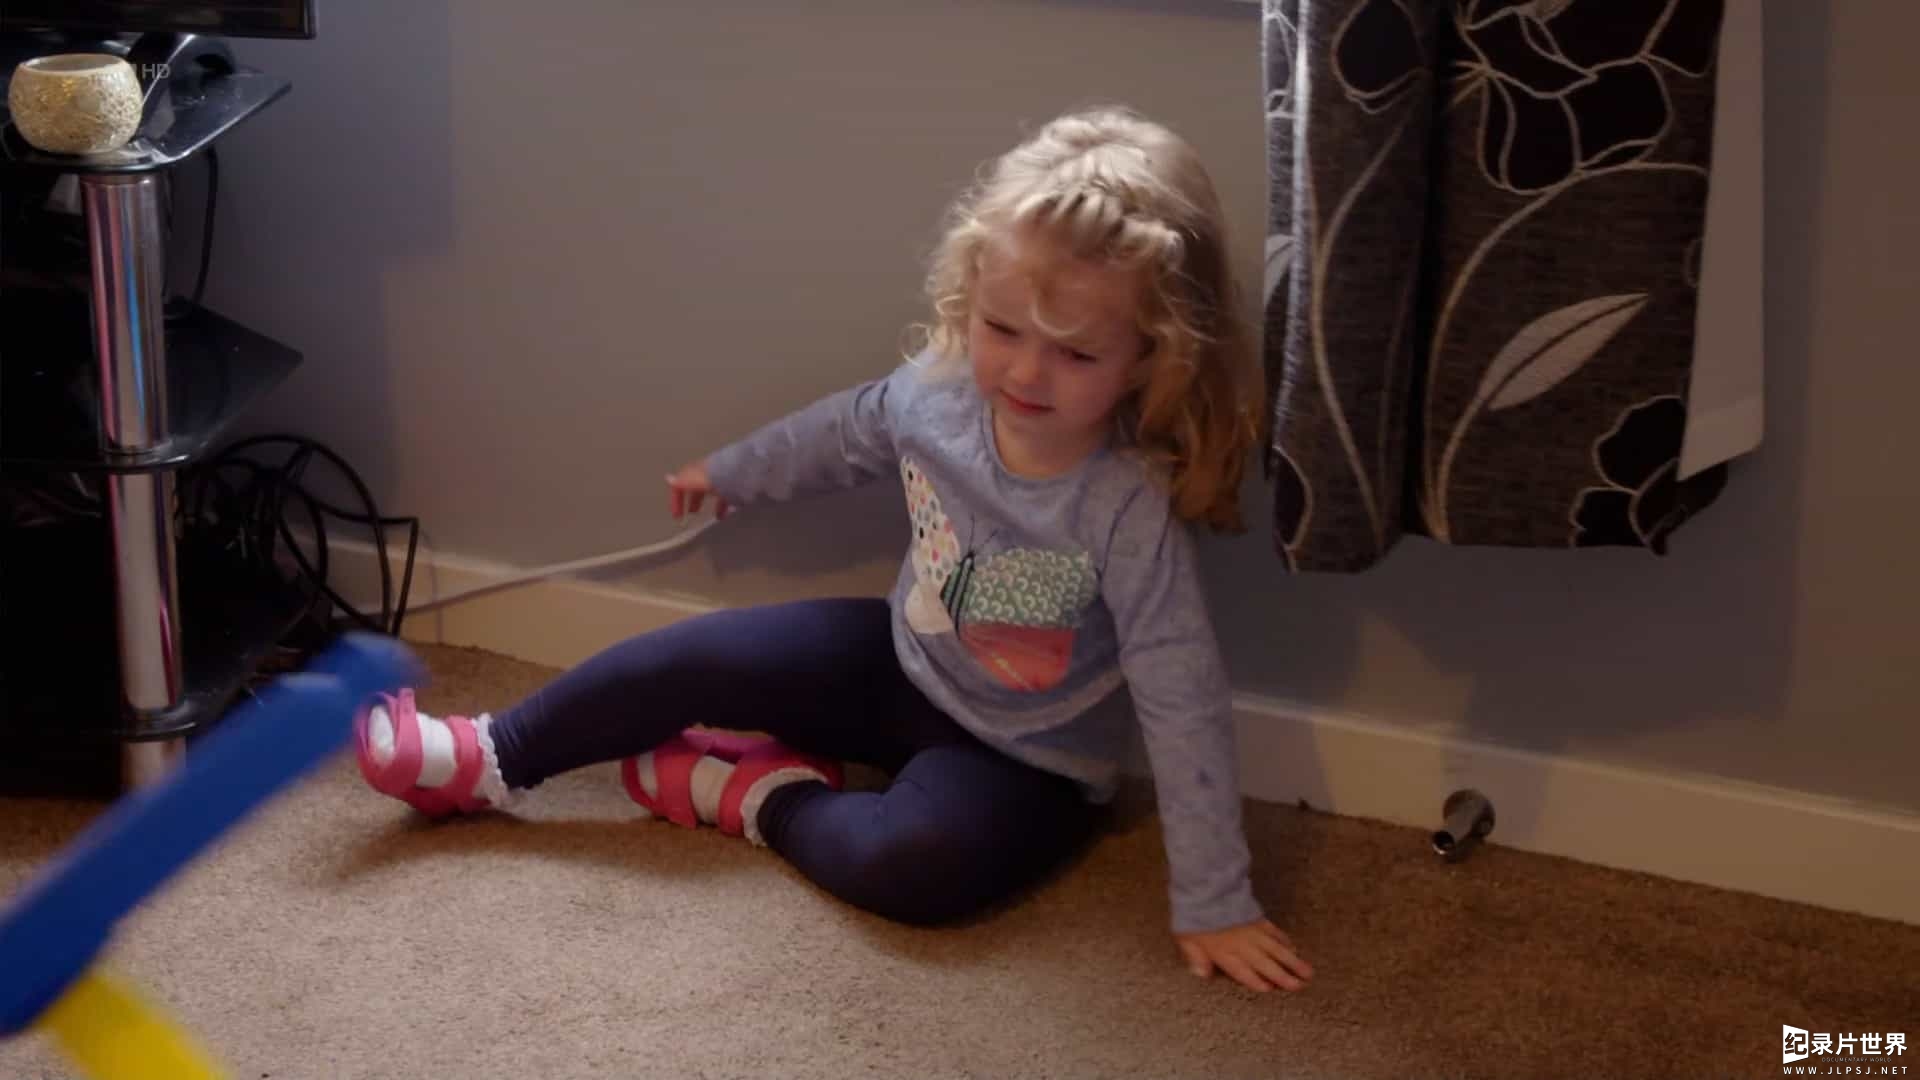 Ch5纪录片《幼儿的糟糕行为/幼儿表现（非常）糟糕 Toddlers Behaving Very Badly 2020》全3集